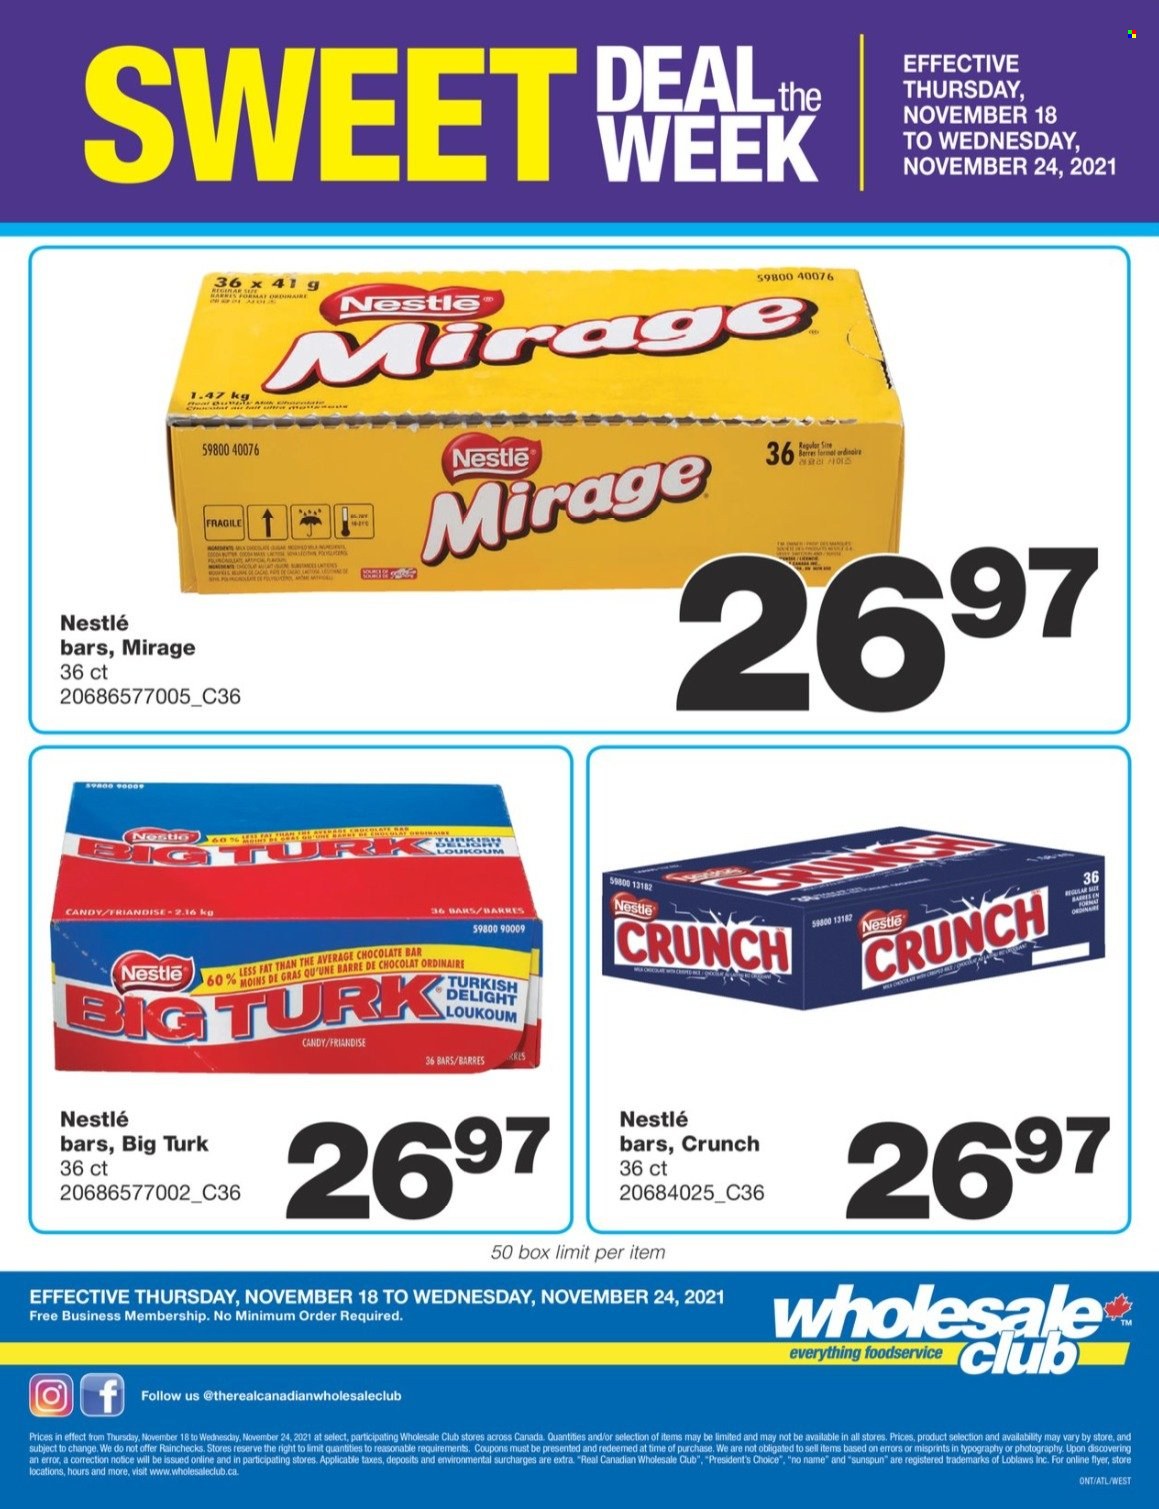 thumbnail - Wholesale Club Flyer - November 18, 2021 - November 24, 2021 - Sales products - No Name, Président, chocolate bar, Nestlé. Page 1.